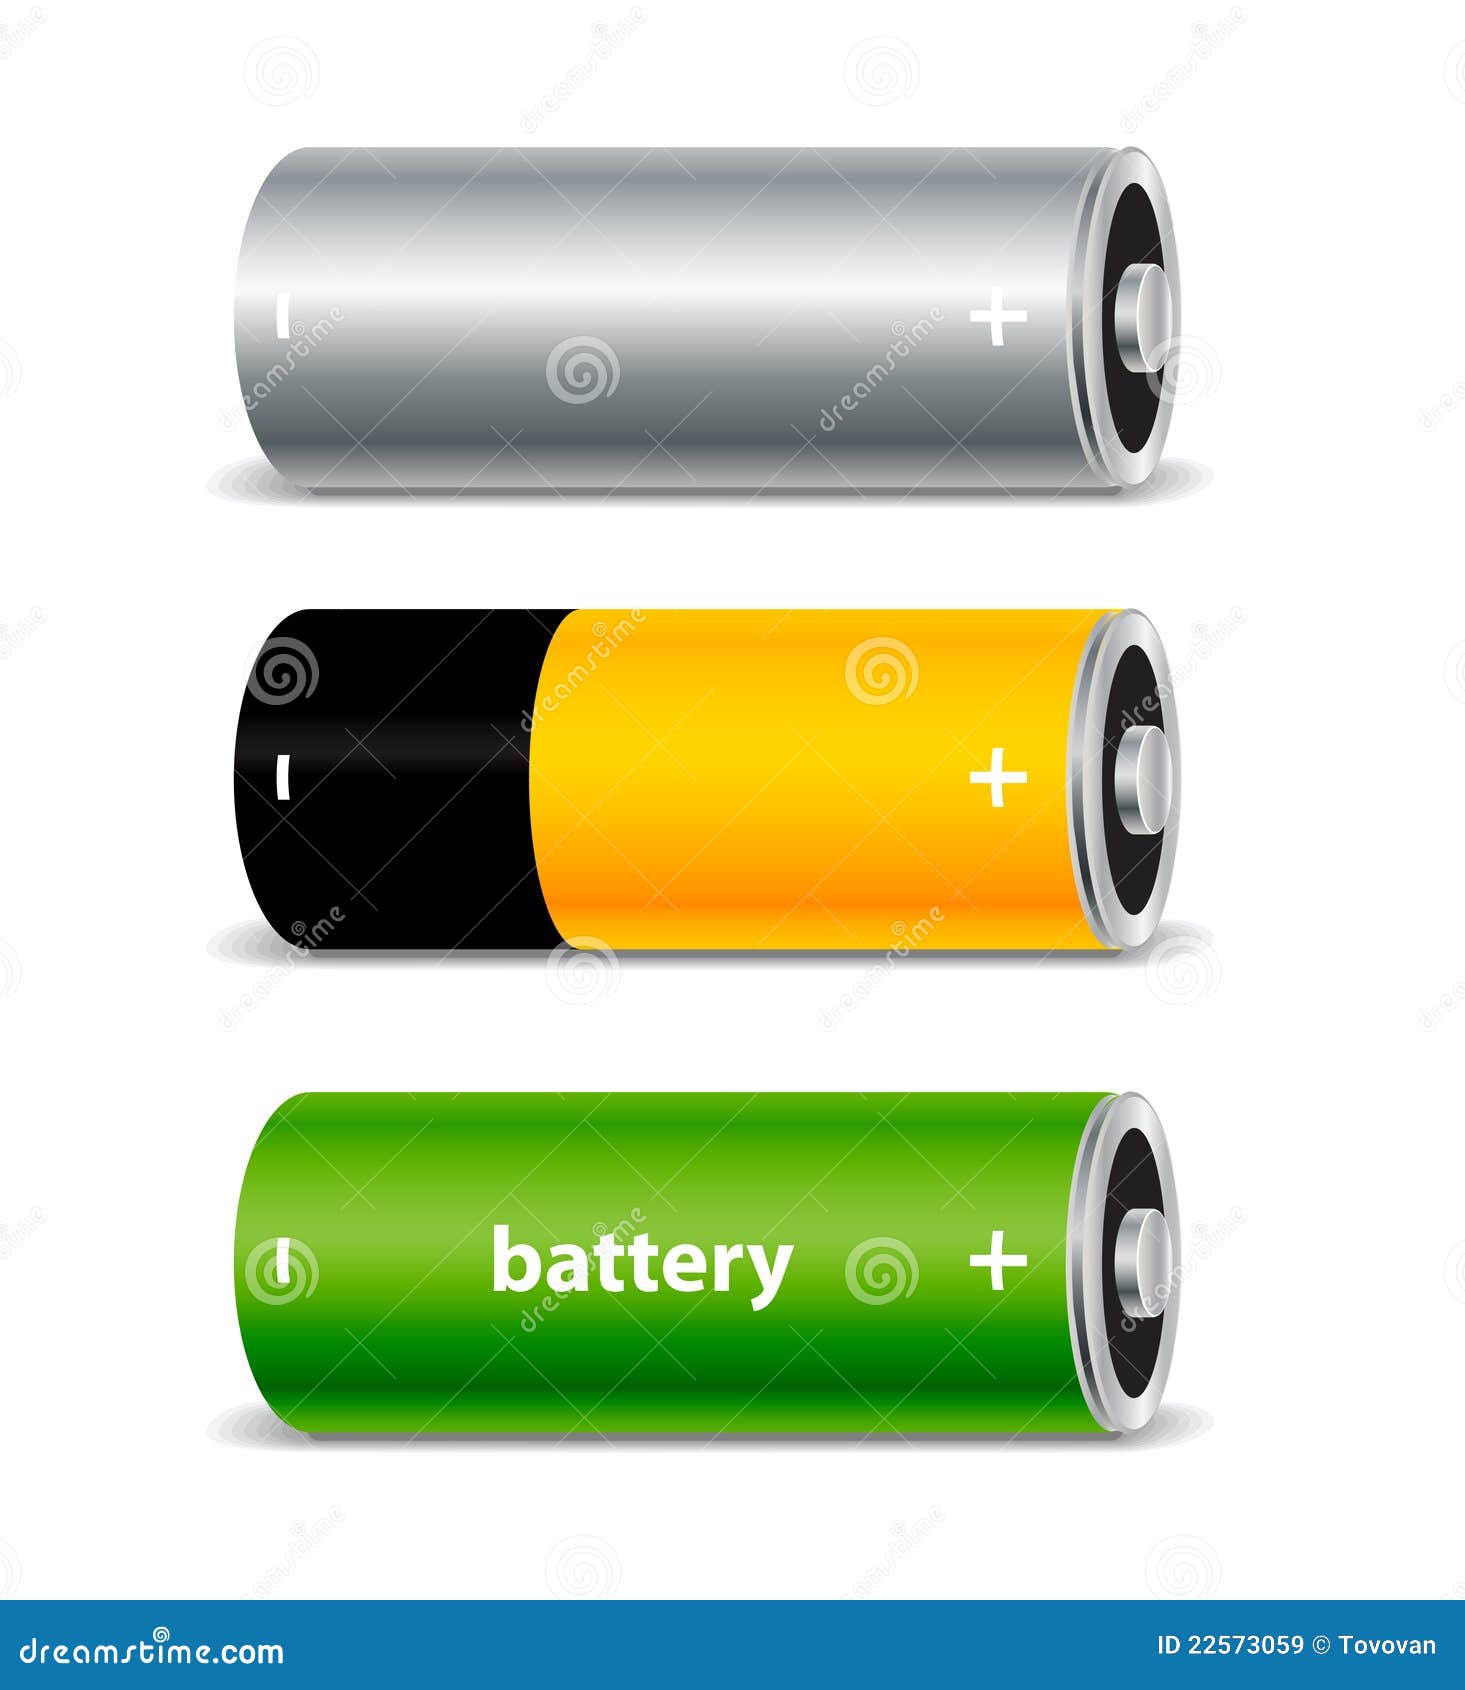 30 батарея рисунок. Батарея вектор. Батарейка рисунок. Векторная батарейка. Батарейка нарисованная.